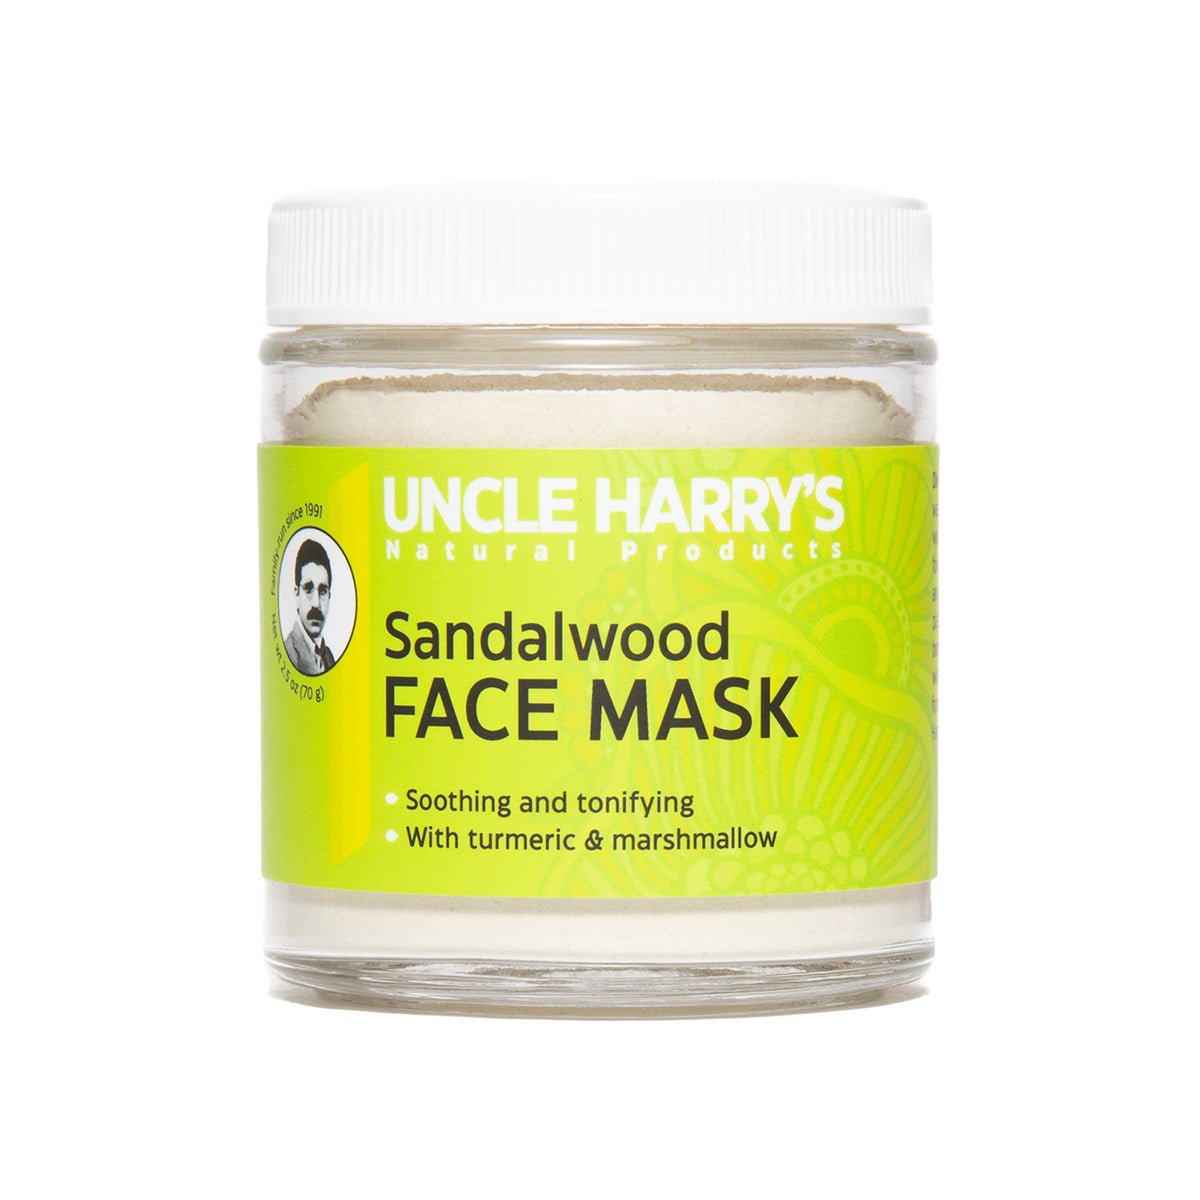 Sandalwood Face Mask 2.5 oz glass jar